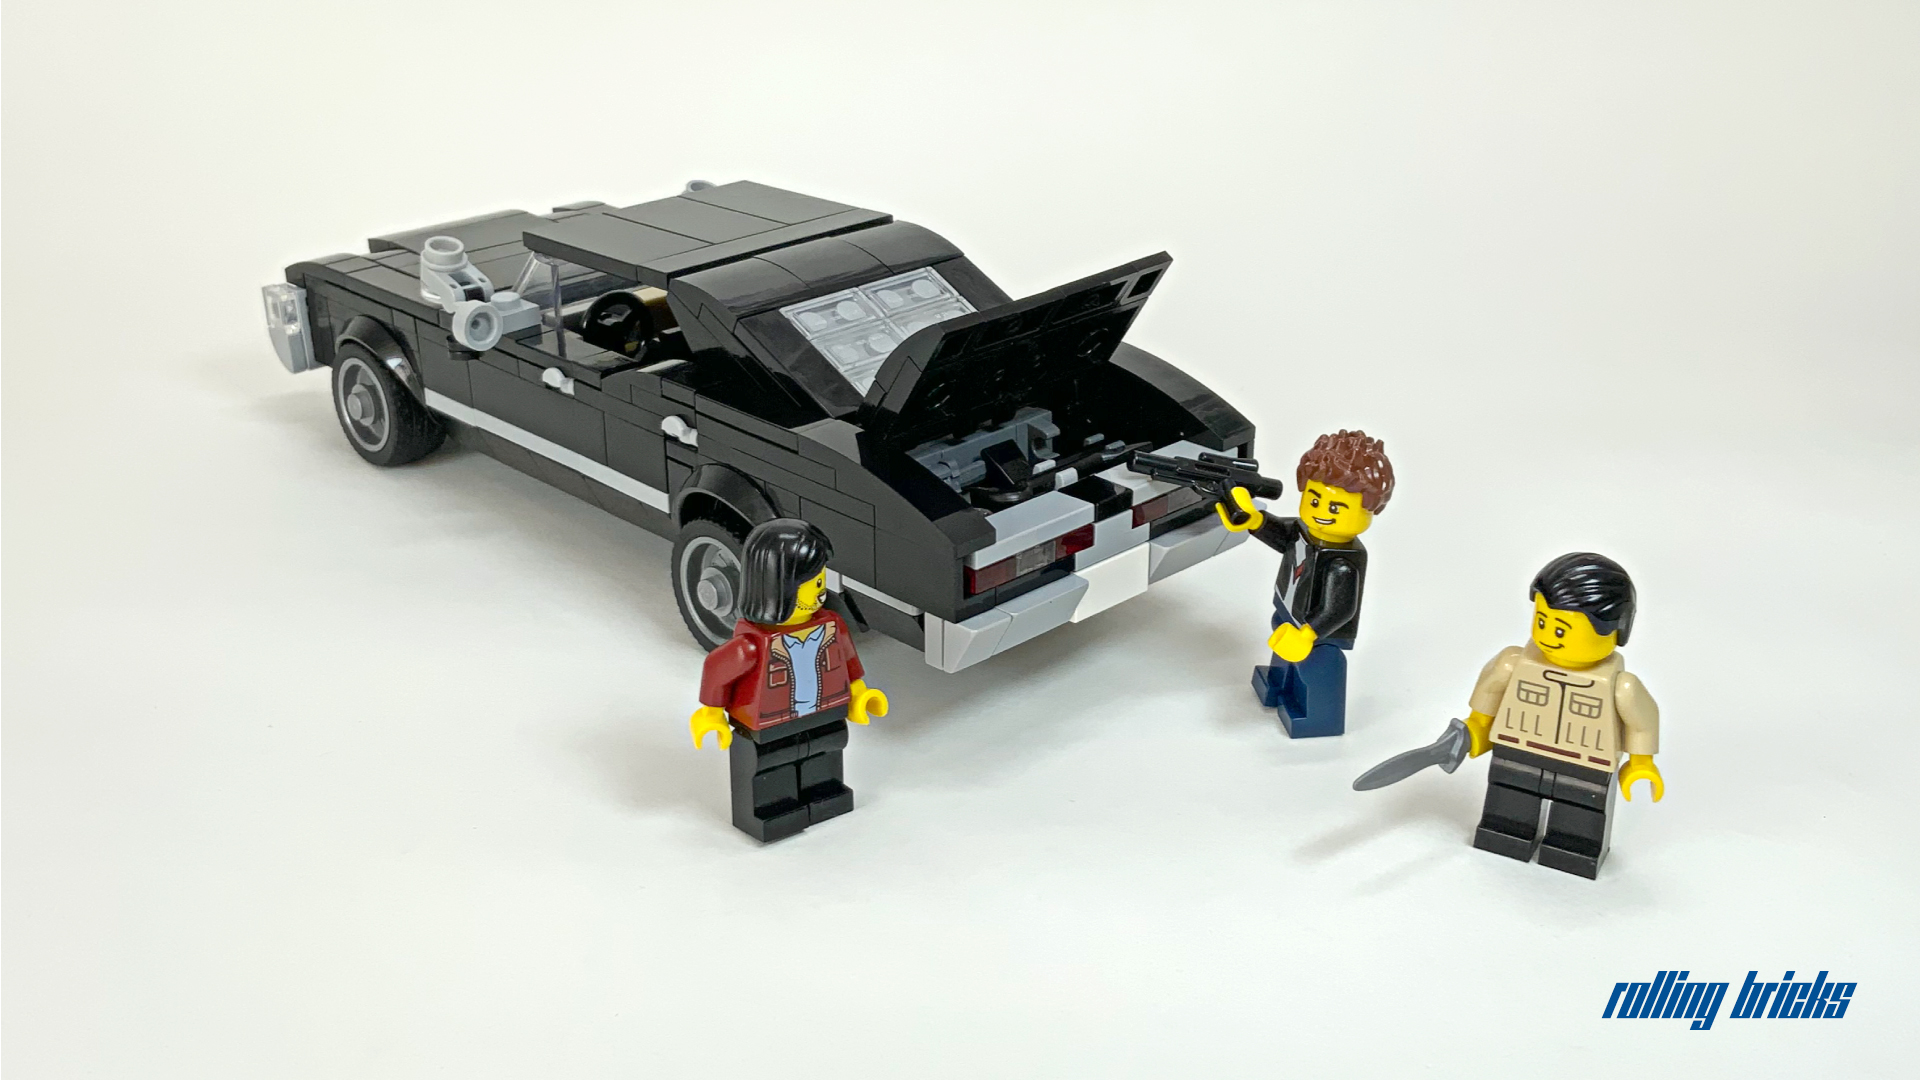 LEGO MOC Chevrolet Impala 1967 Supernatural by brick_zz